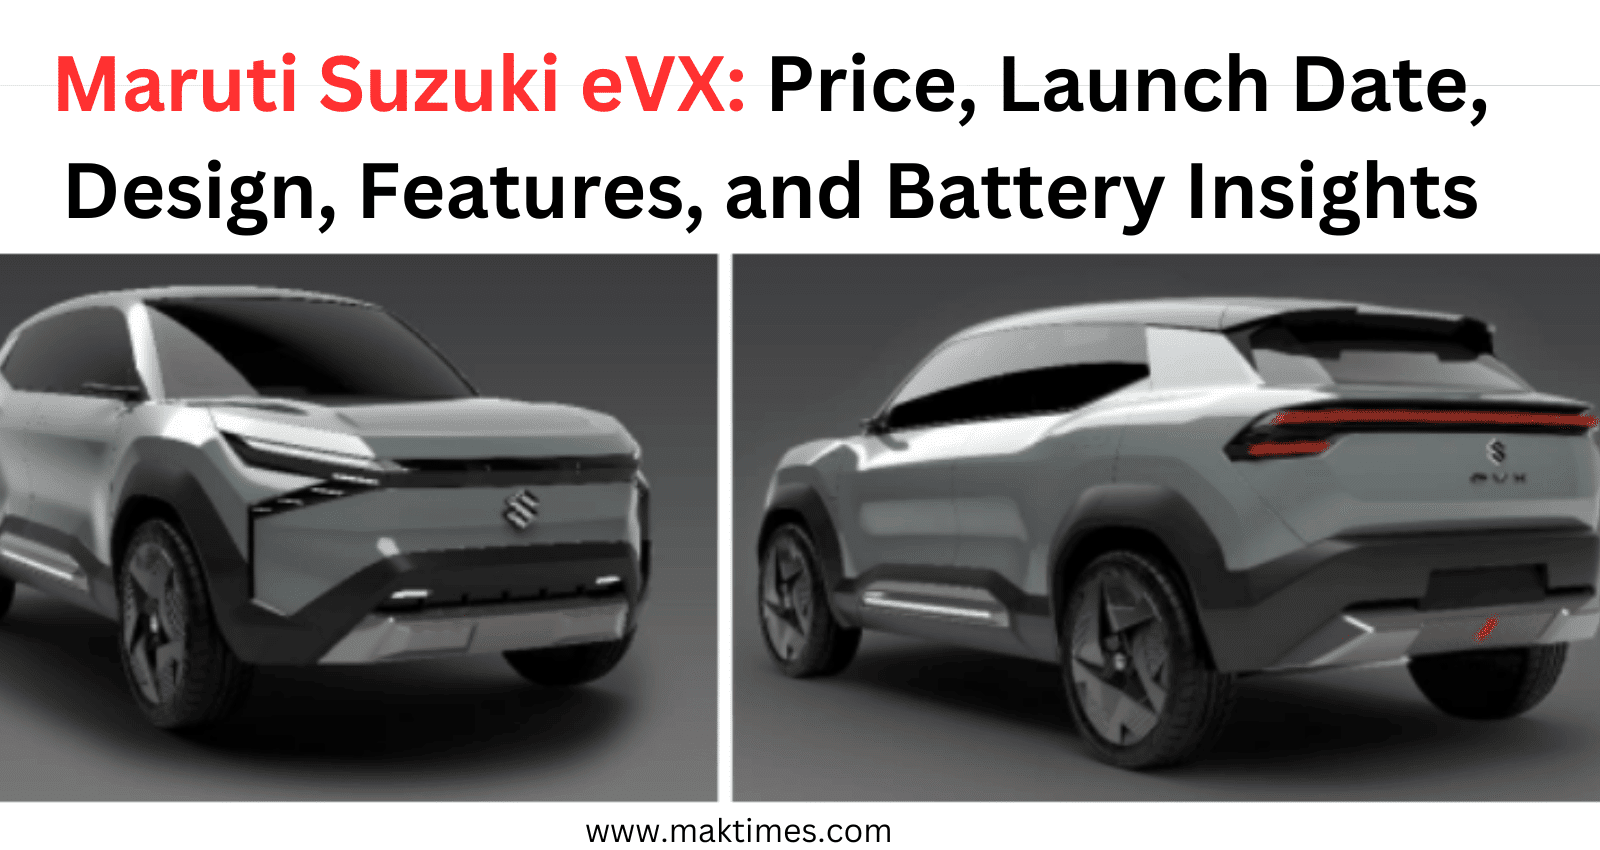 Maruti Suzuki eVX: Price, Launch Date, Design, Features, and Battery Insights